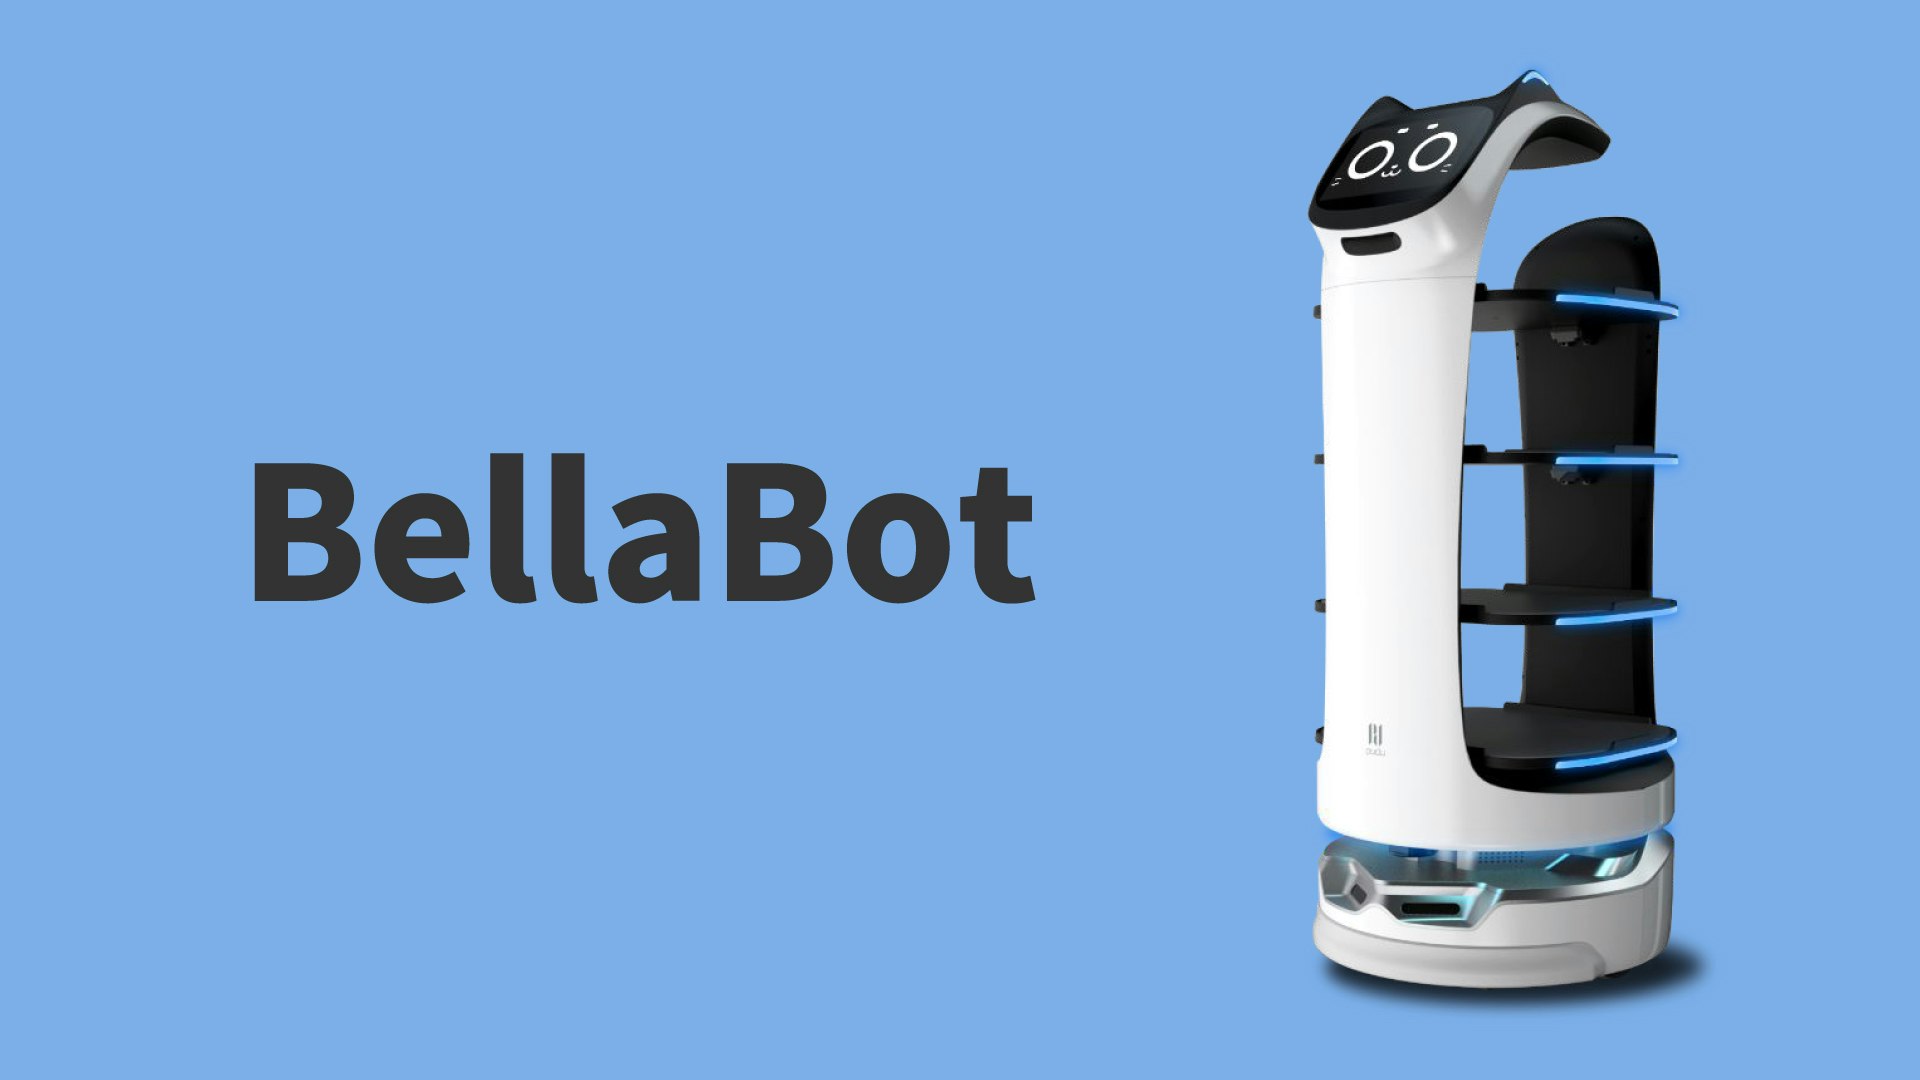 40kgの料理をまる1日運べる
配膳ロボット「BellaBot」のキービジュアル